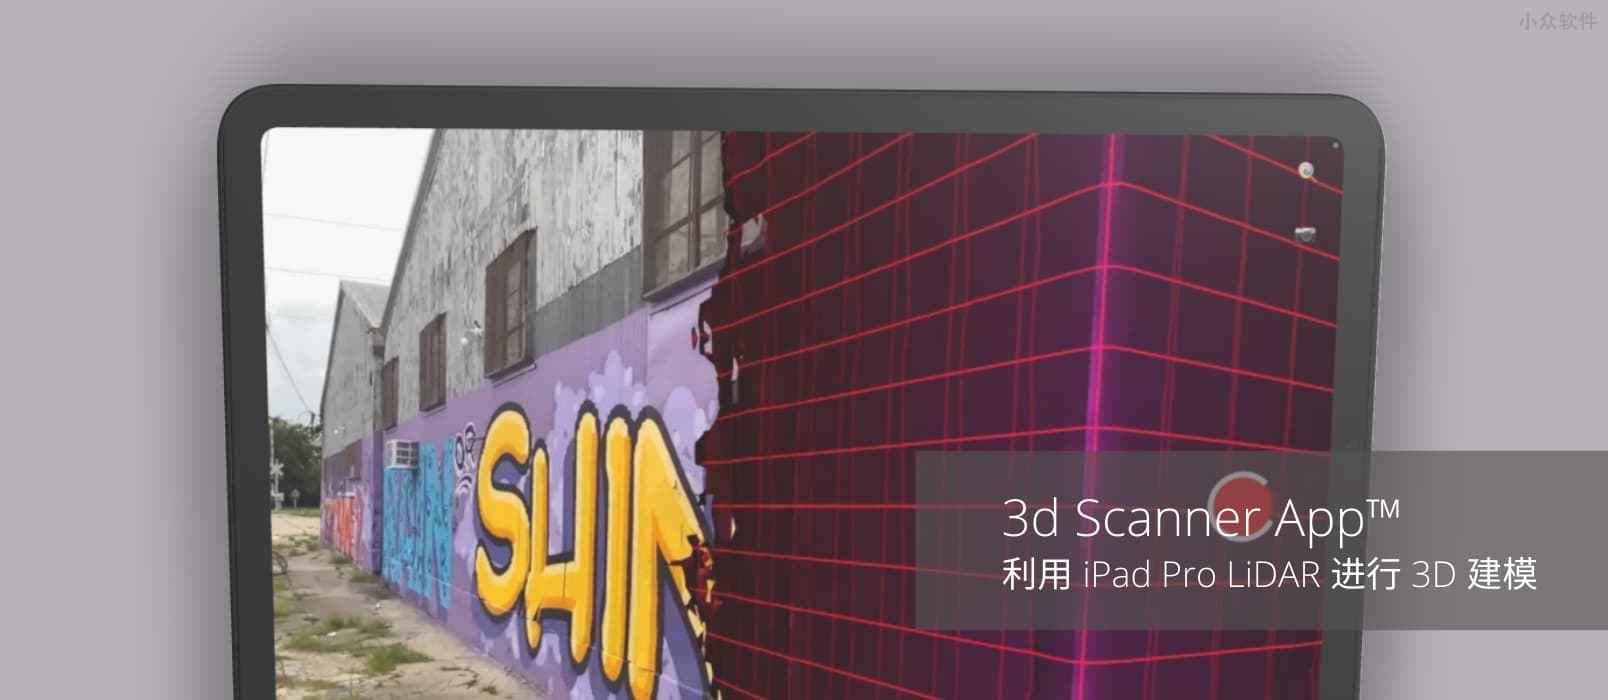 3d Scanner App™ – 利用 iPad Pro LIDAR 激光雷达扫描建筑物，进行 3D 建模